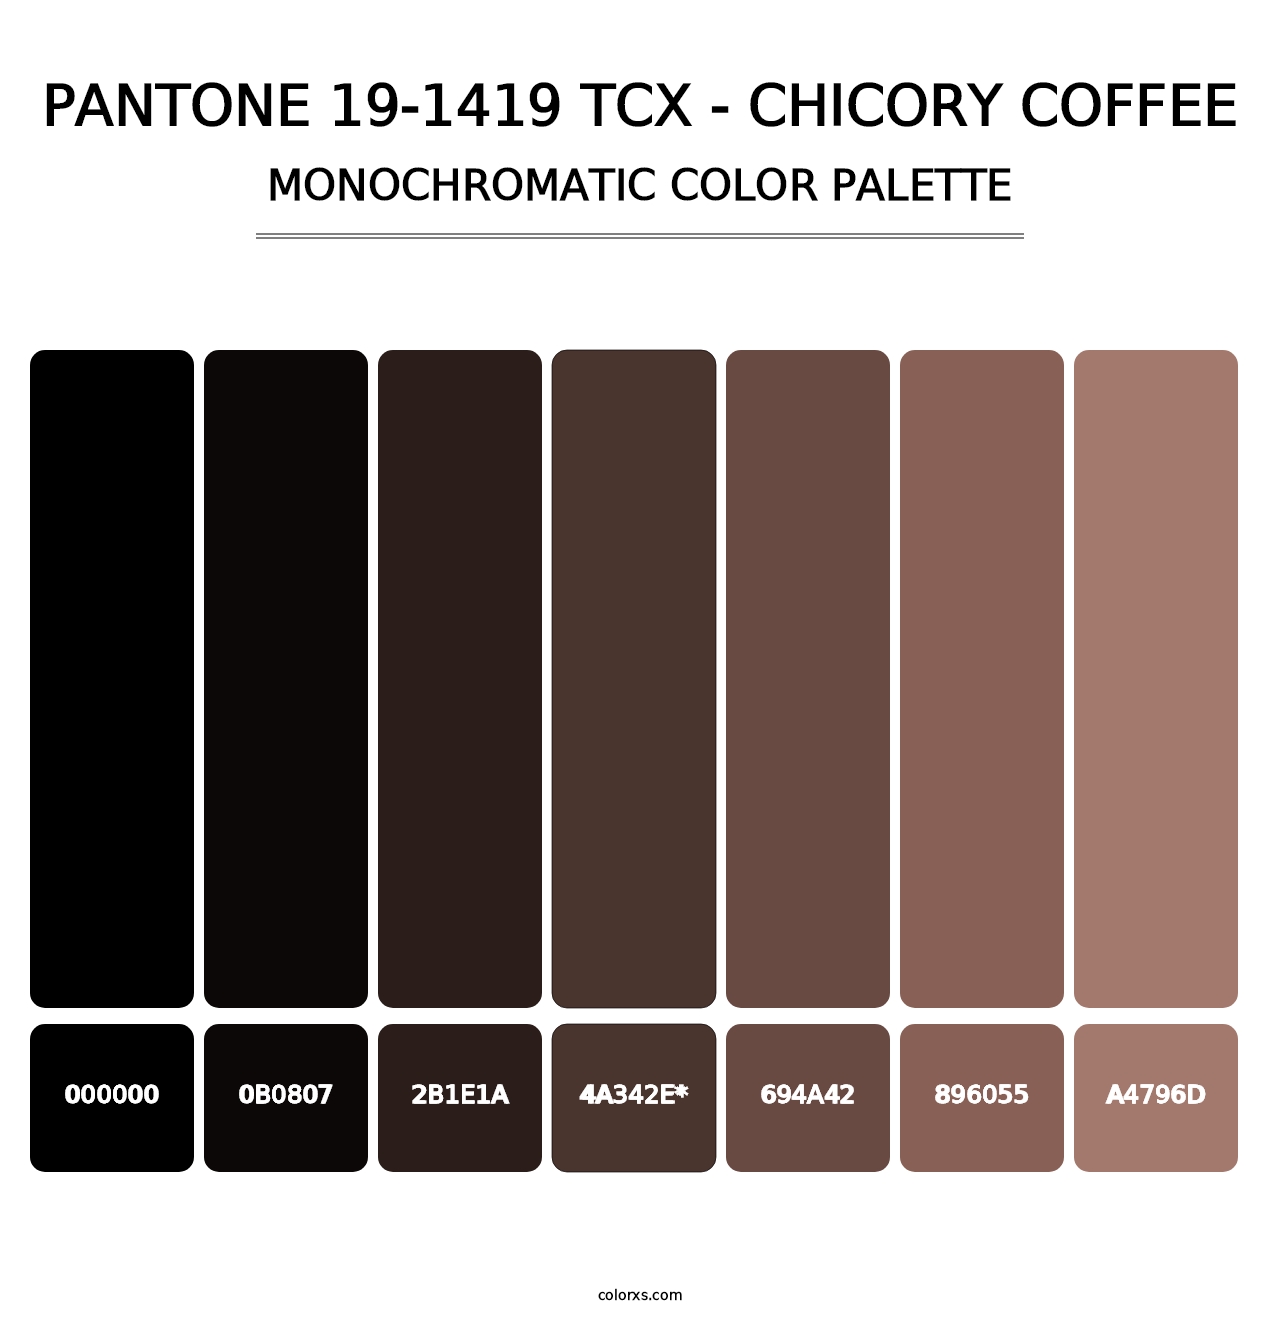 PANTONE 19-1419 TCX - Chicory Coffee - Monochromatic Color Palette